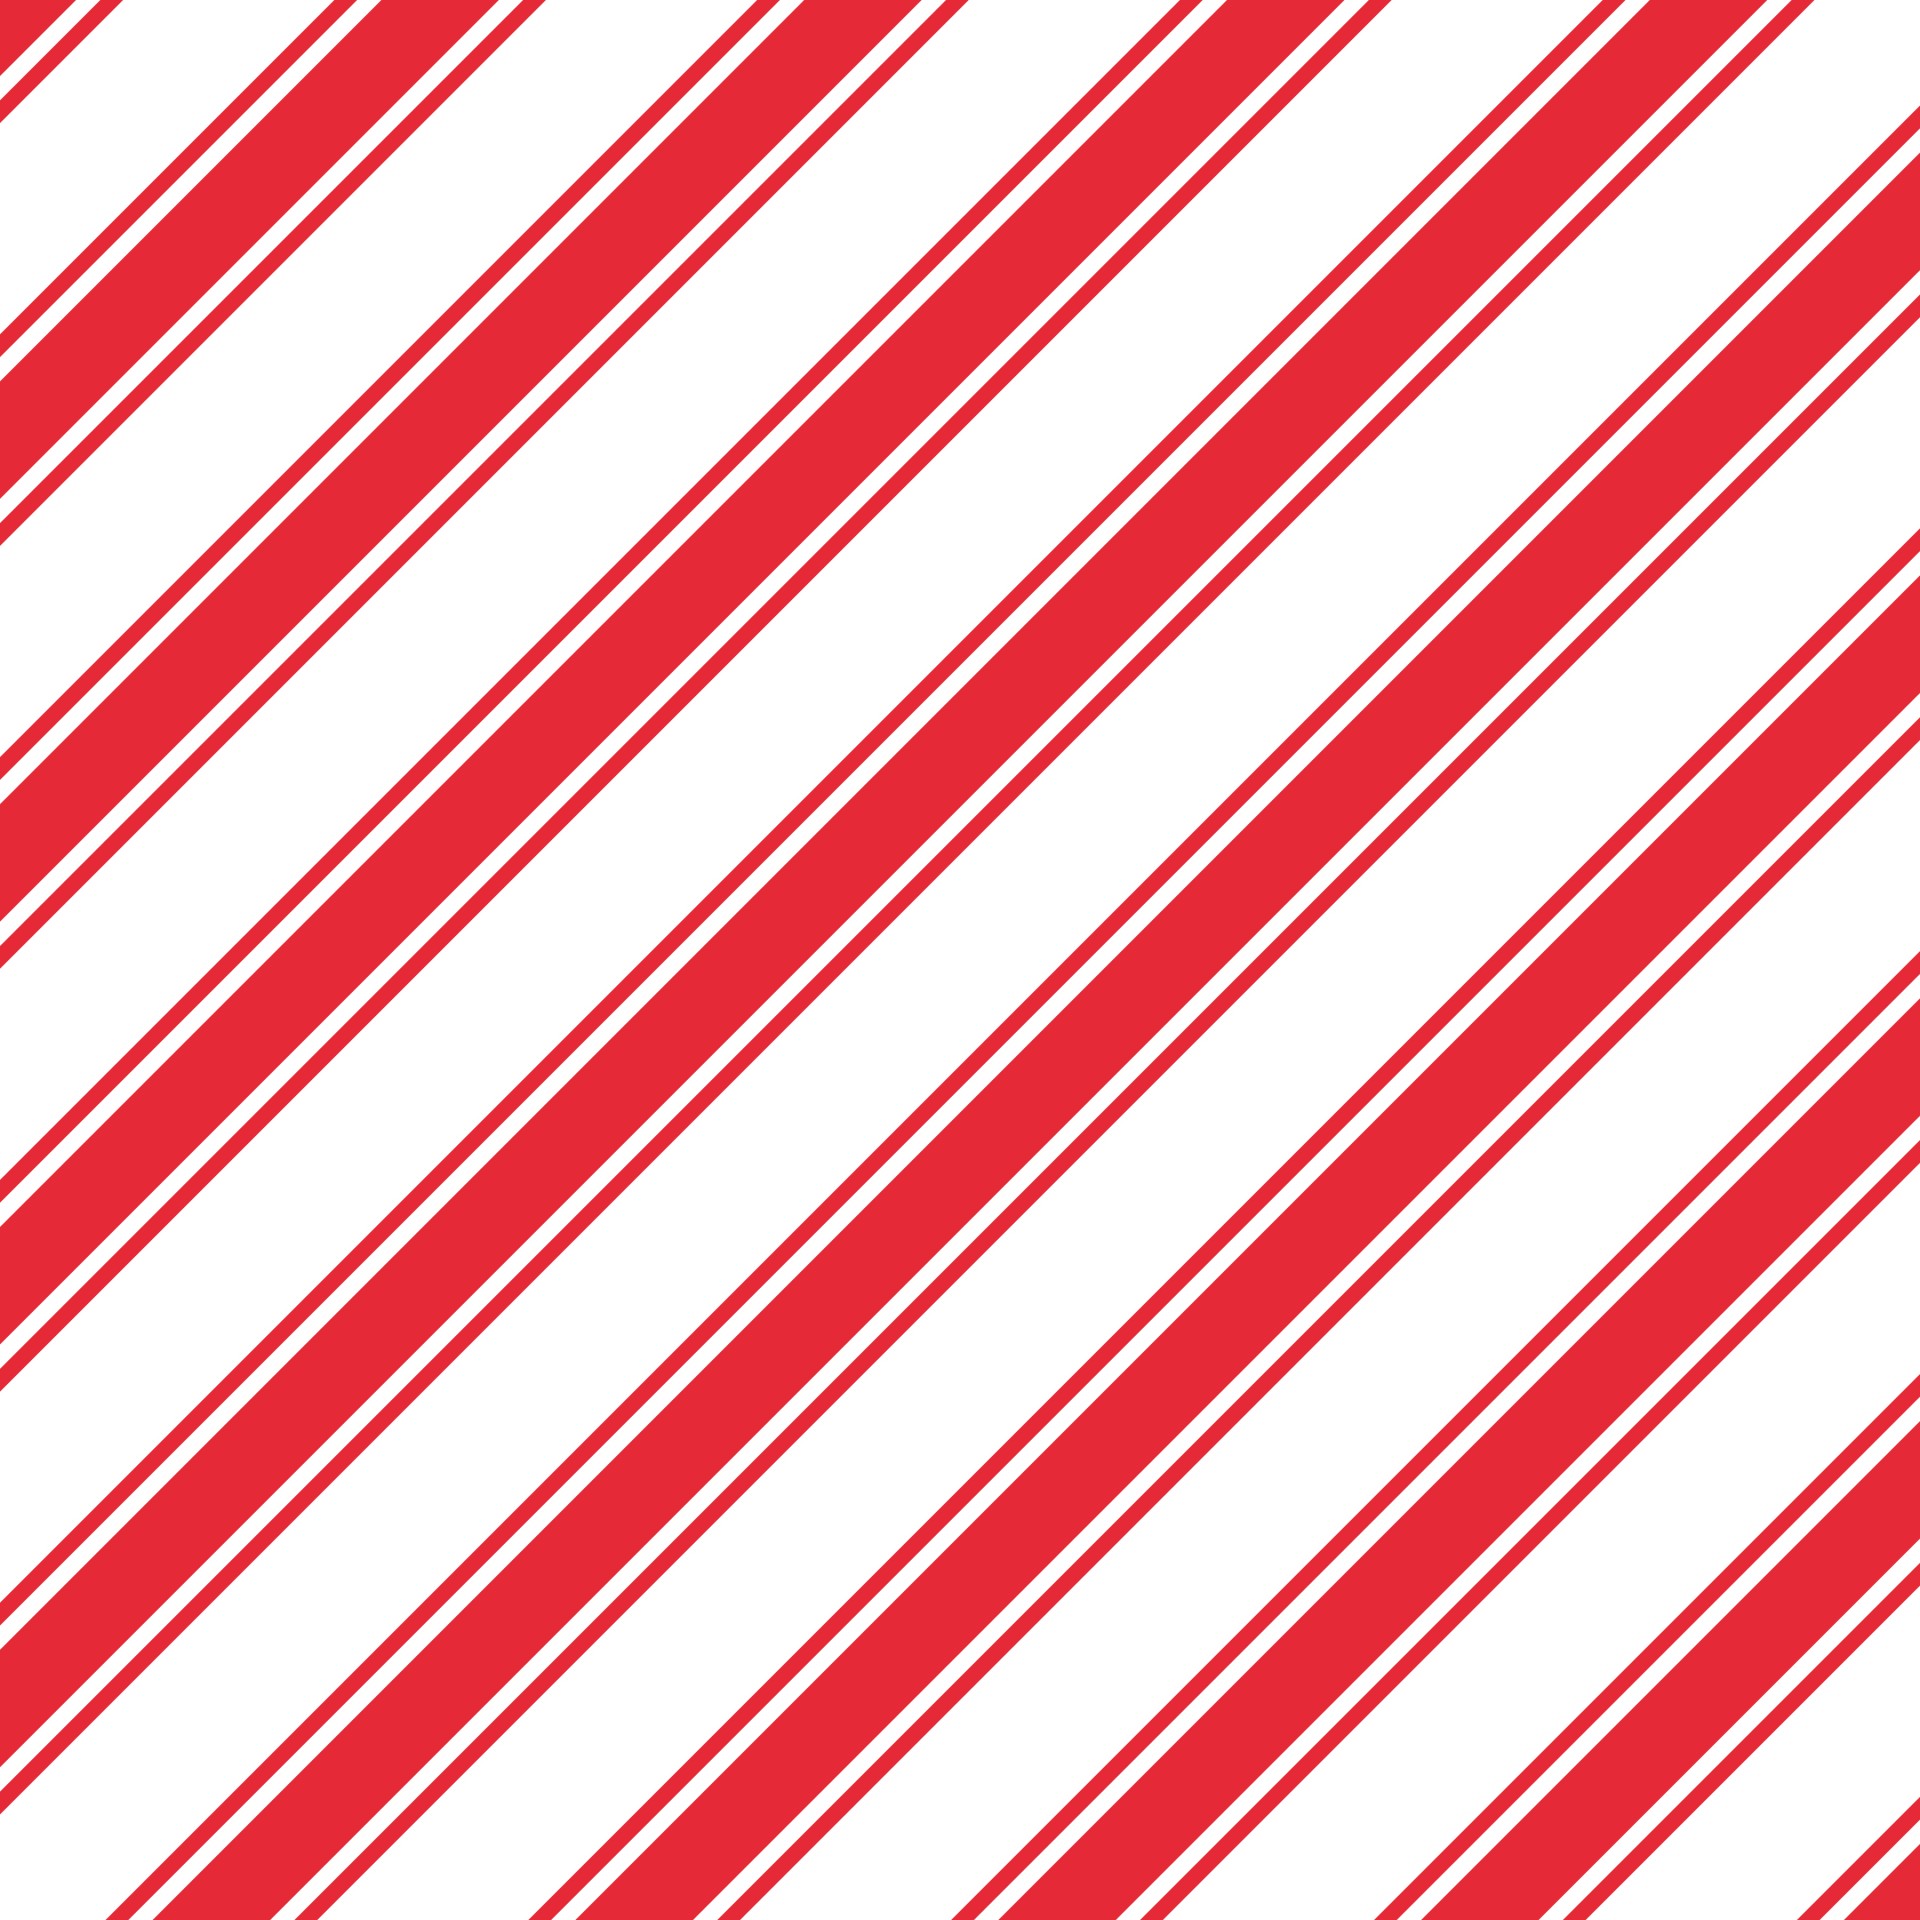 alizarin crimson red stripes pattern free photo